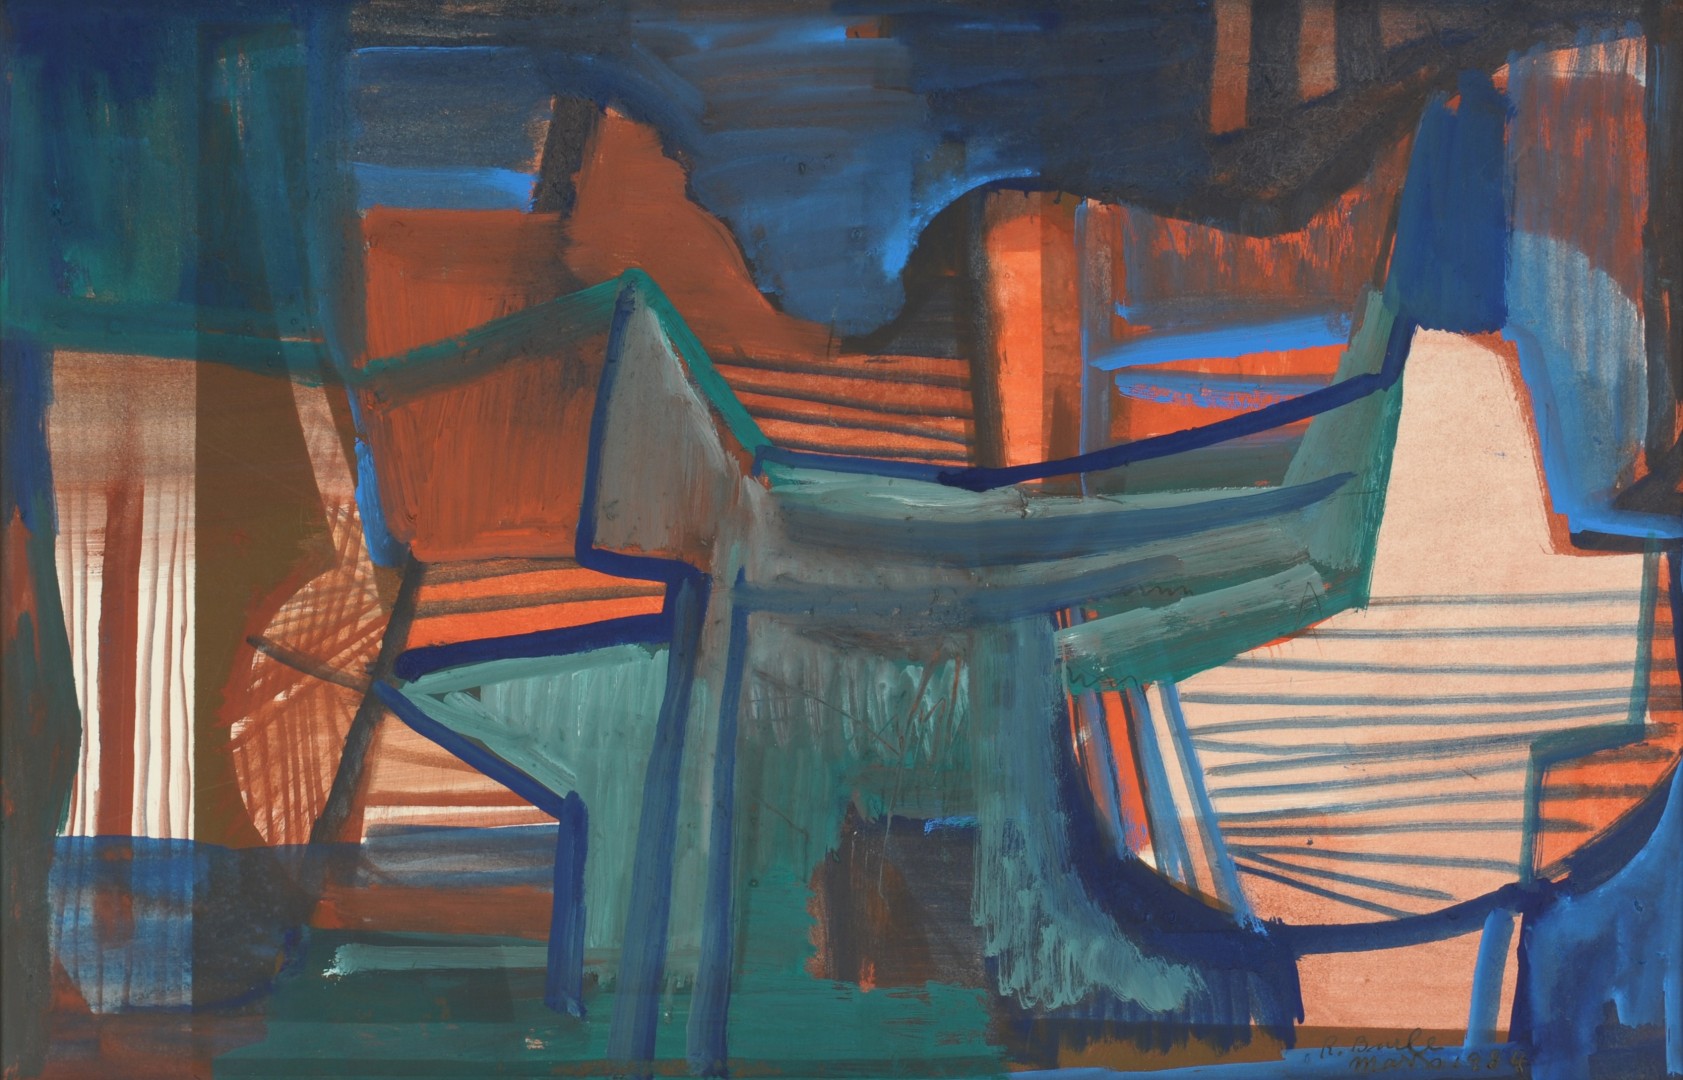 Lot 177: Roberto Burle Marx Abstract Painting